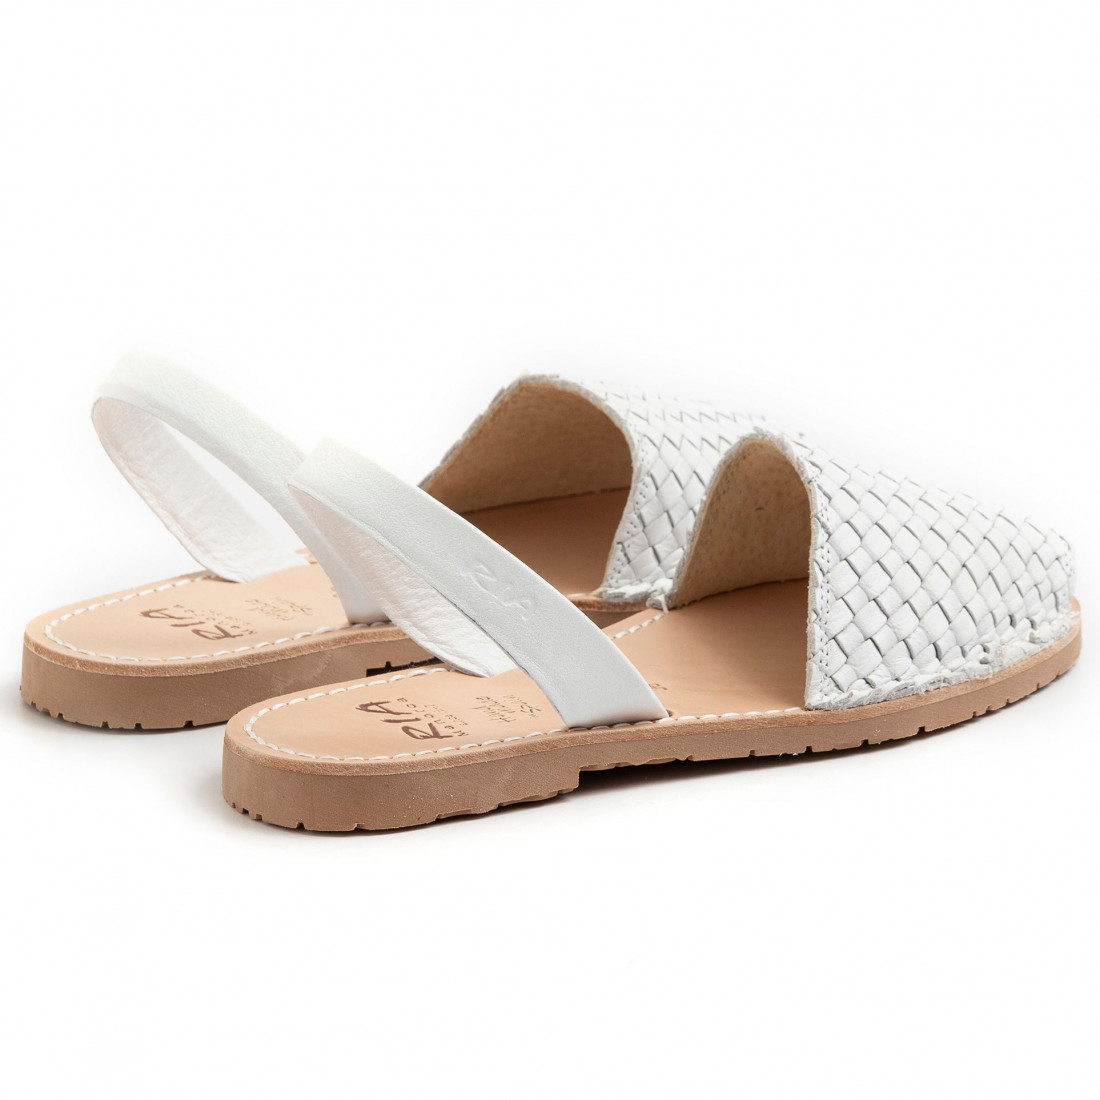 Ria Menorca 27803 abarcas sandal in white woven leather